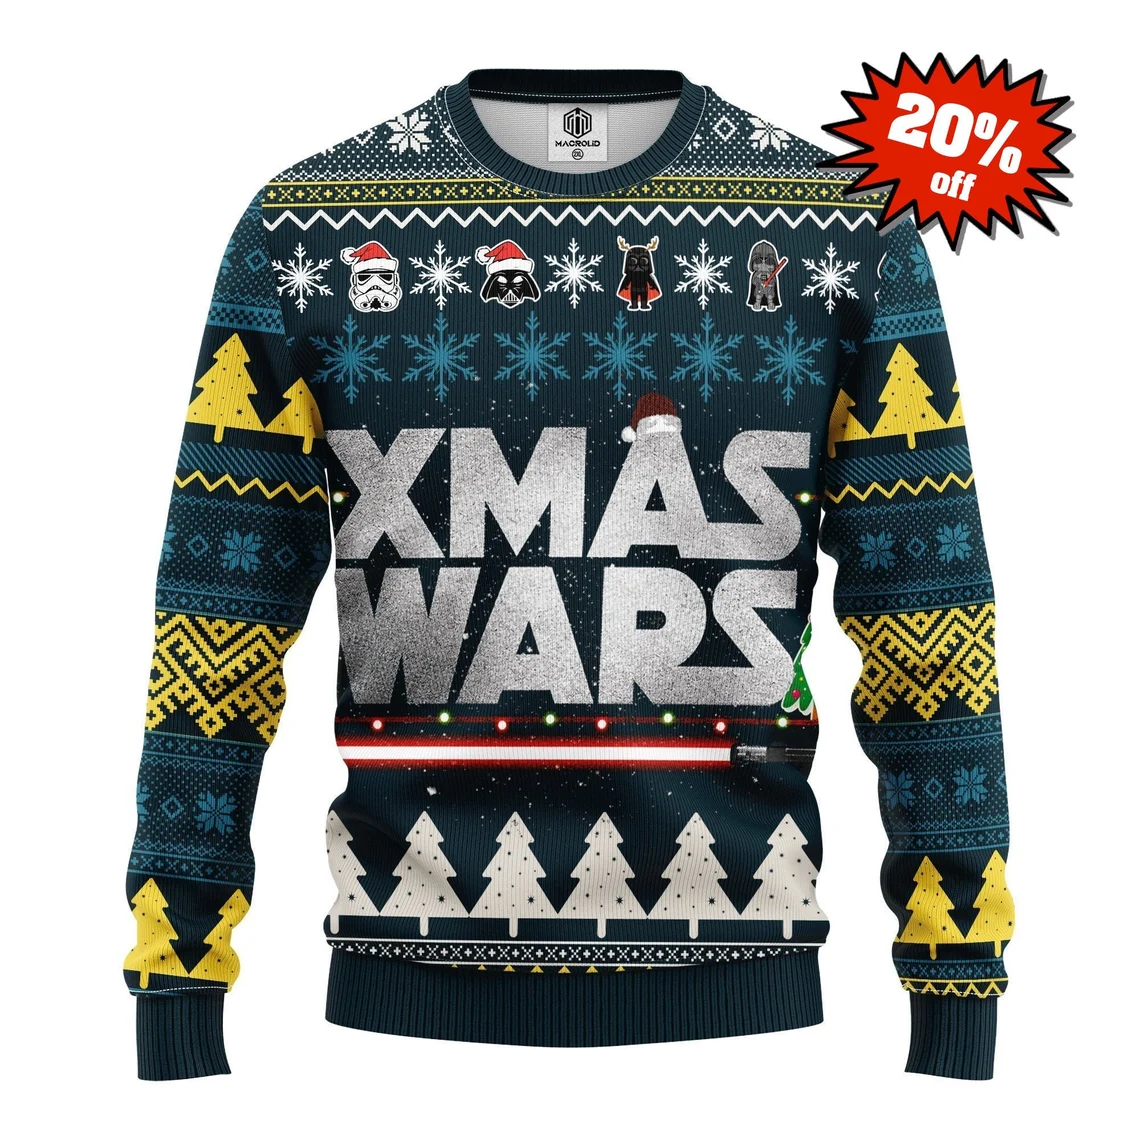 Xmas Wars Ugly Christmas Sweater